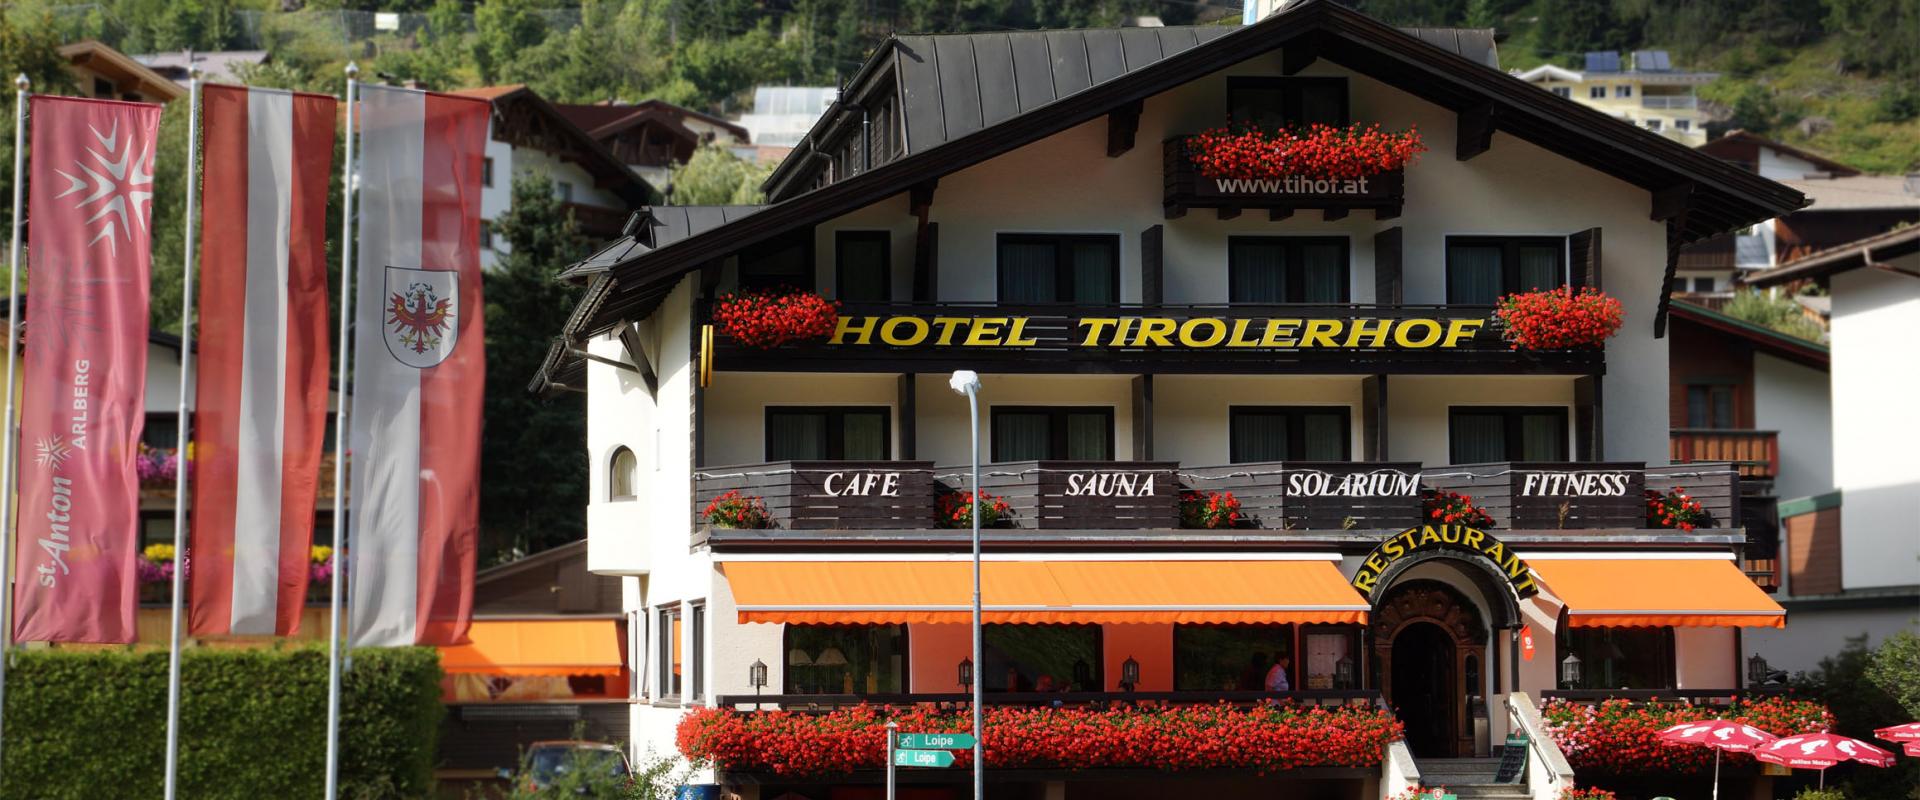 30327 Biker Hotel Tirolerhof im Vorarlberg.jpg